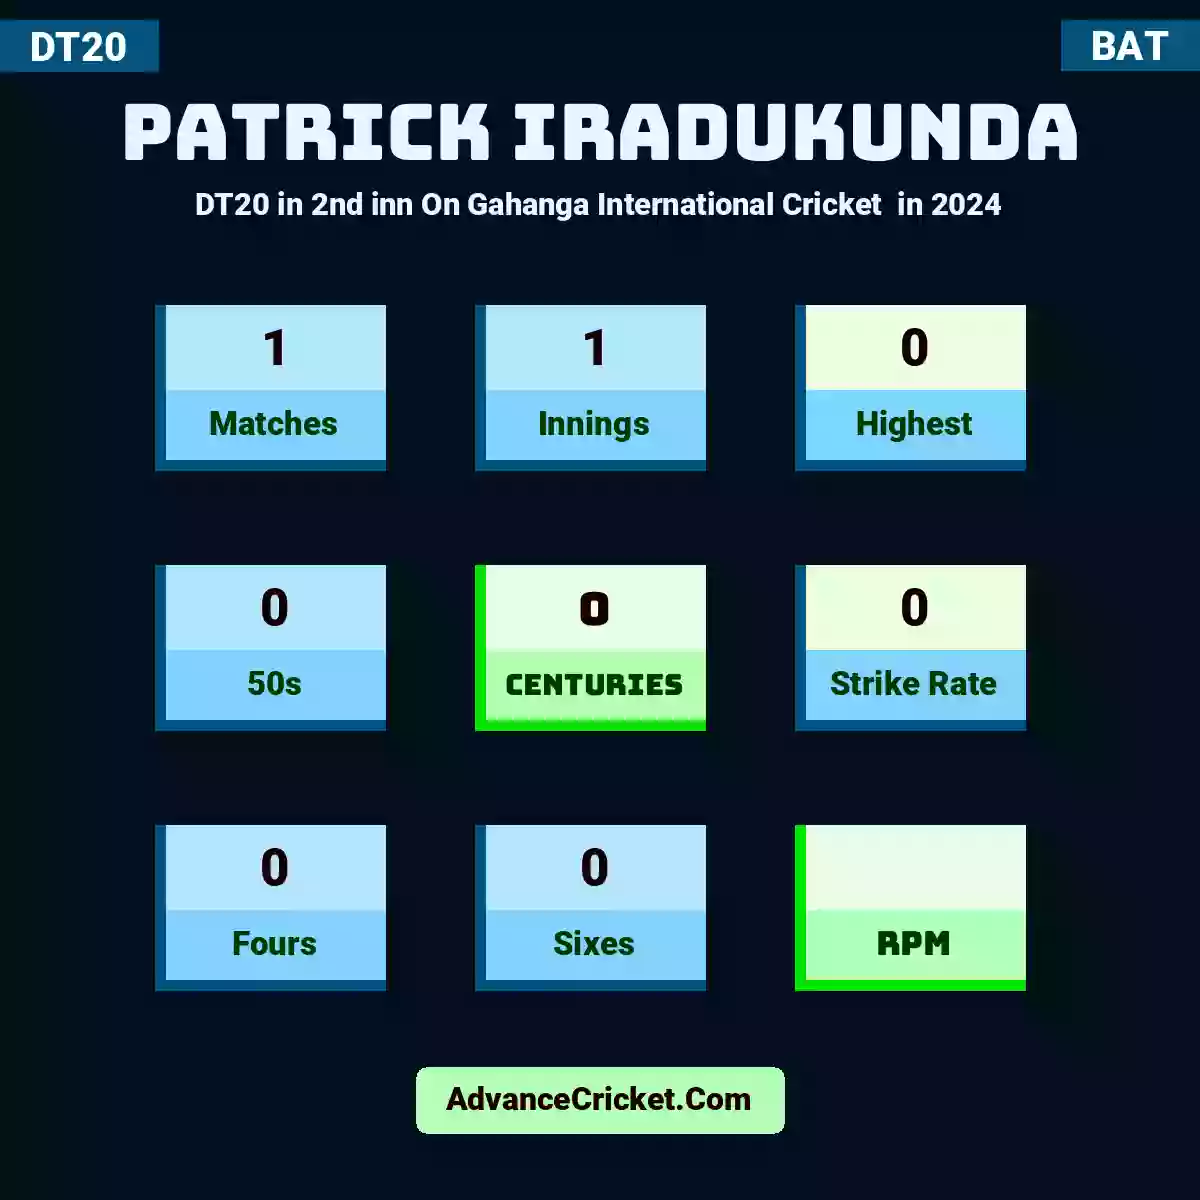 Patrick Iradukunda DT20  in 2nd inn On Gahanga International Cricket  in 2024, Patrick Iradukunda played 1 matches, scored 0 runs as highest, 0 half-centuries, and 0 centuries, with a strike rate of 0. P.Iradukunda hit 0 fours and 0 sixes.